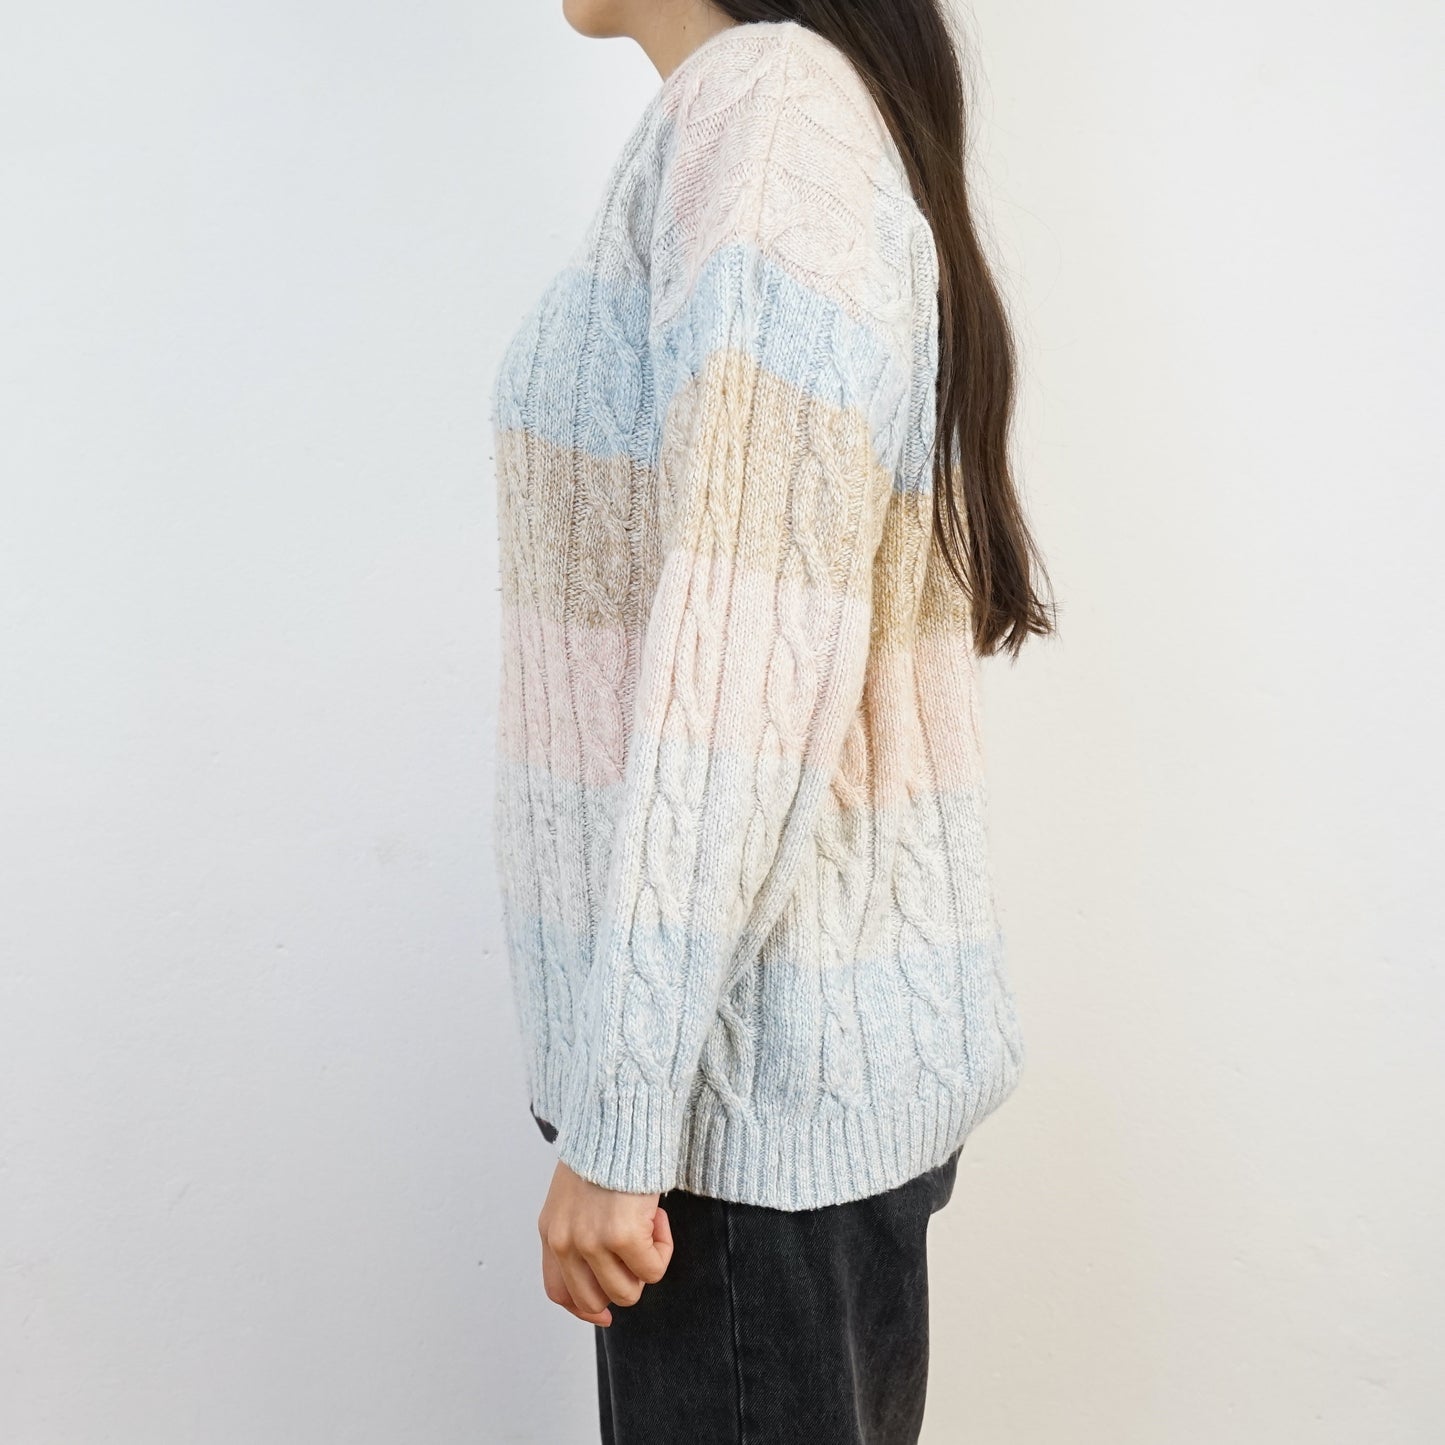 Vintage Pullover size S pastel colors